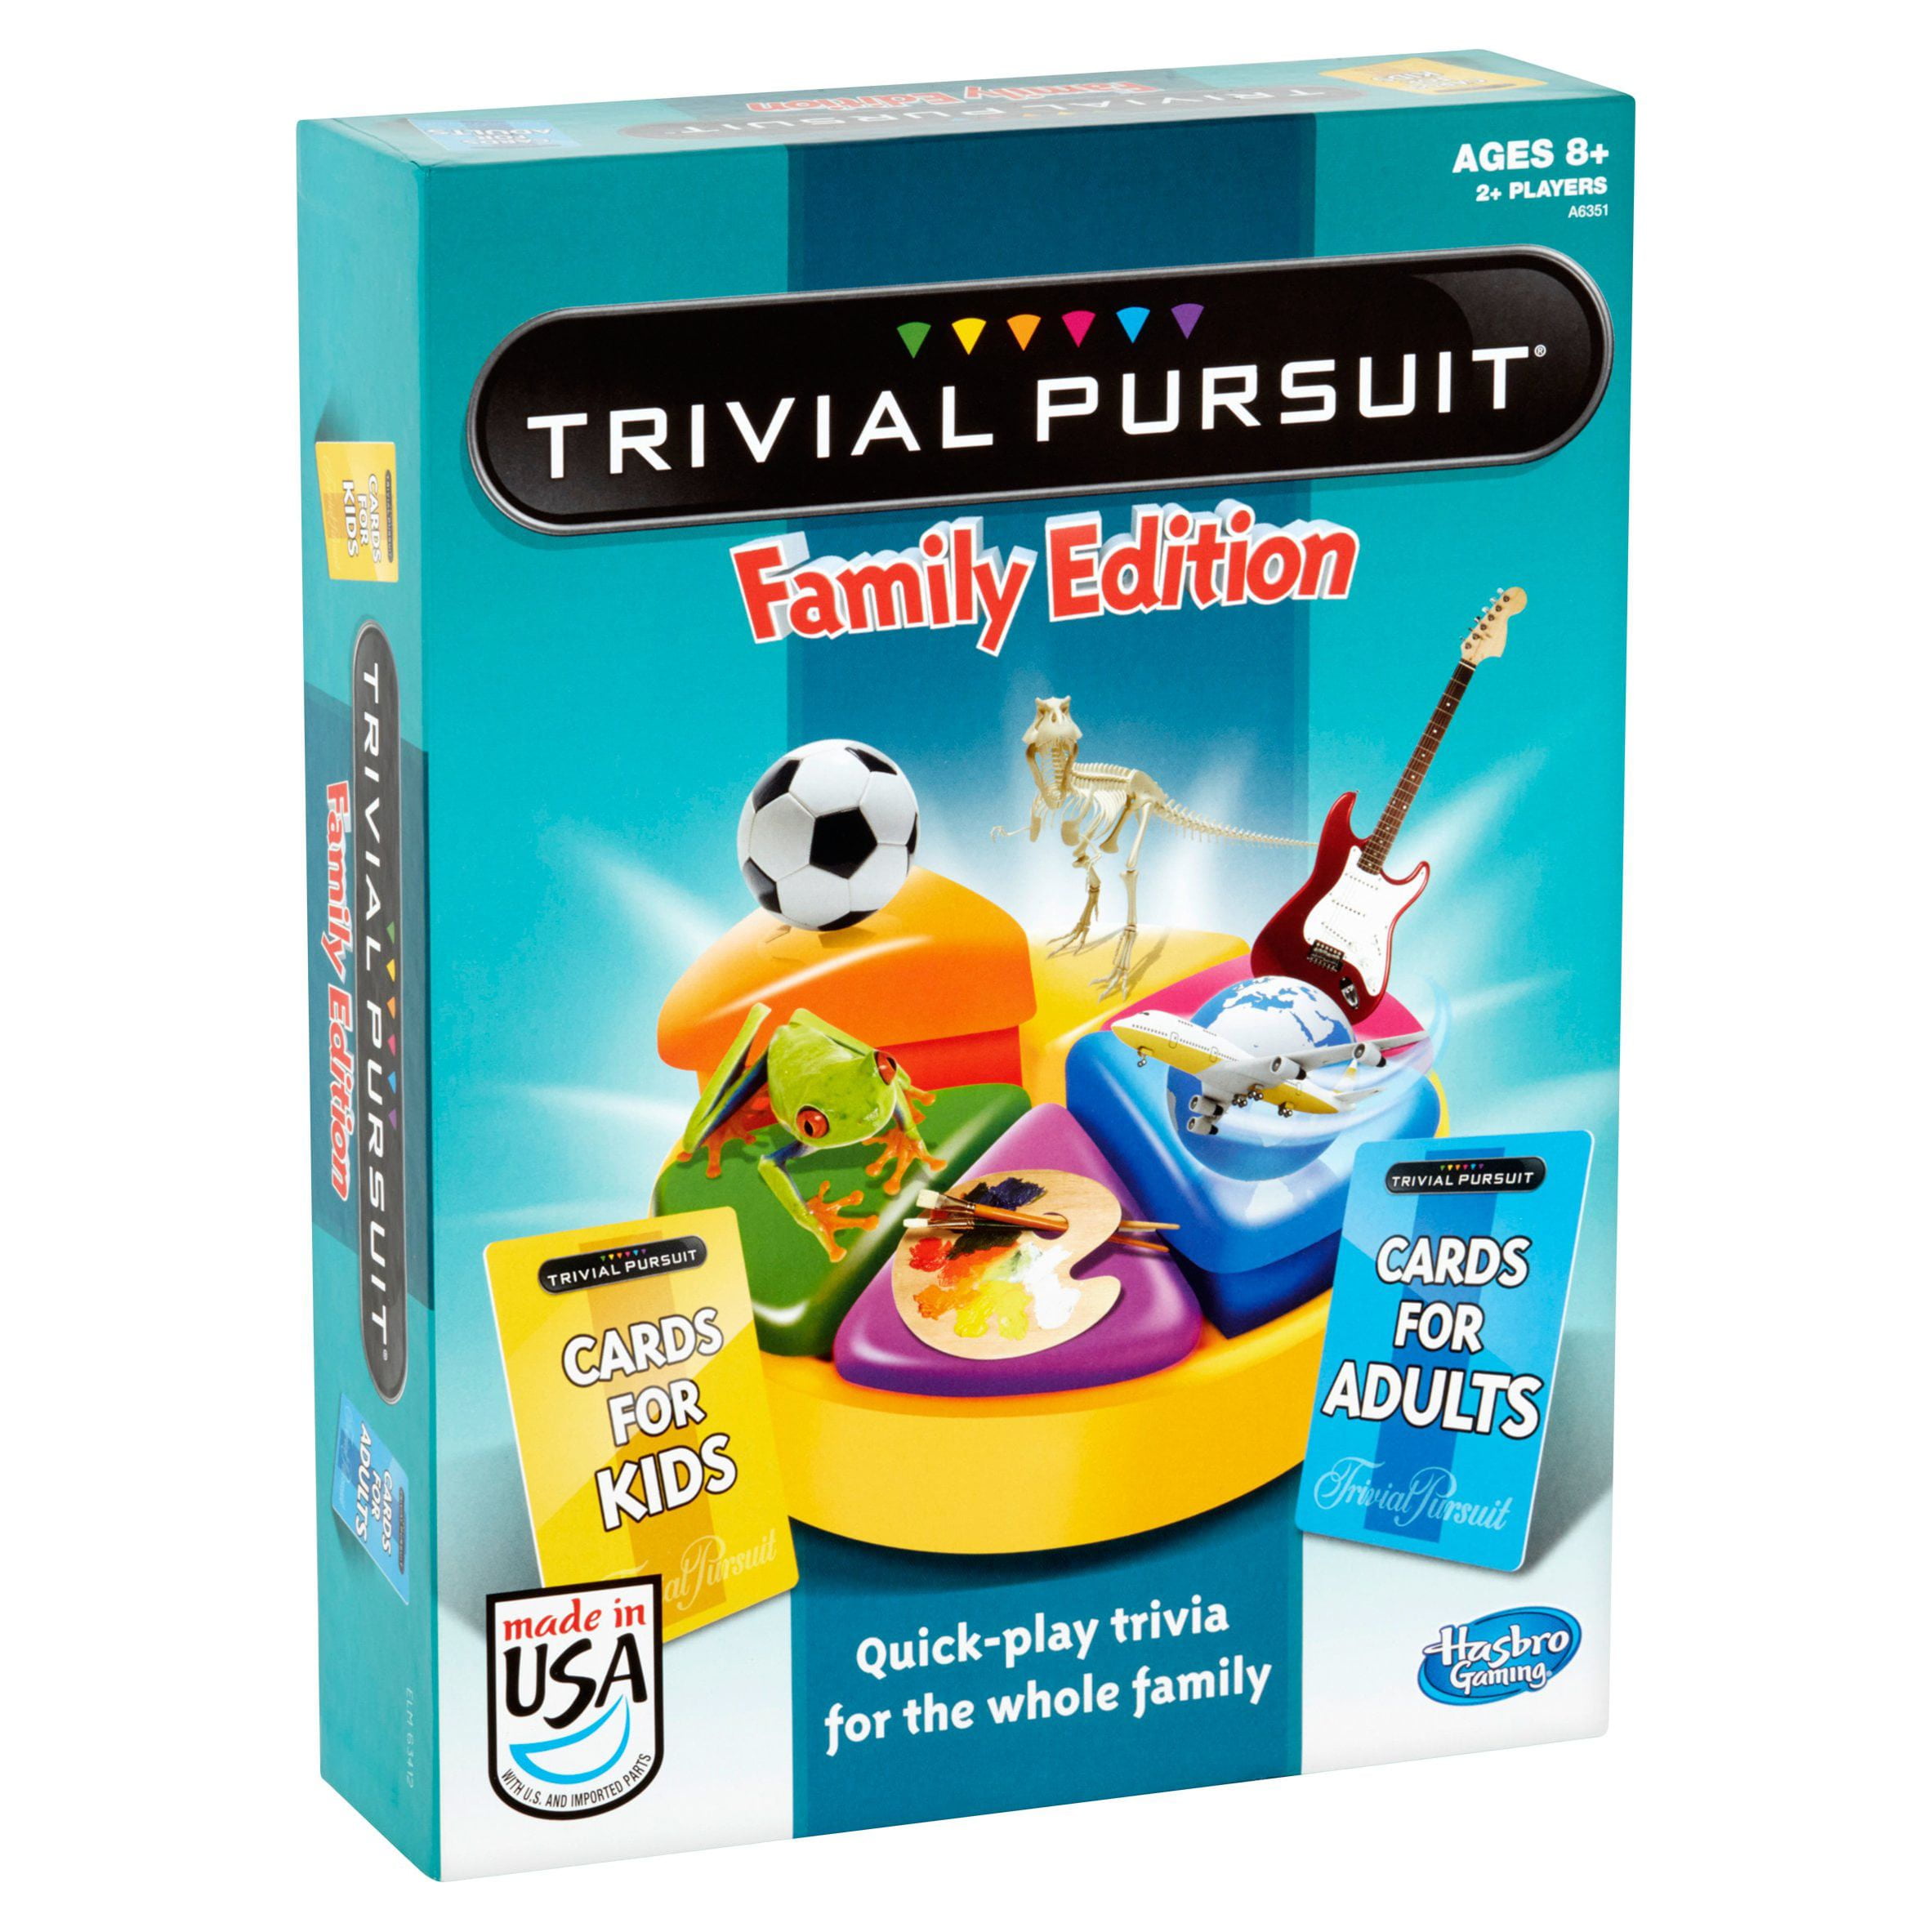 Trivial Pursuit Online, Free Online Trivia Game